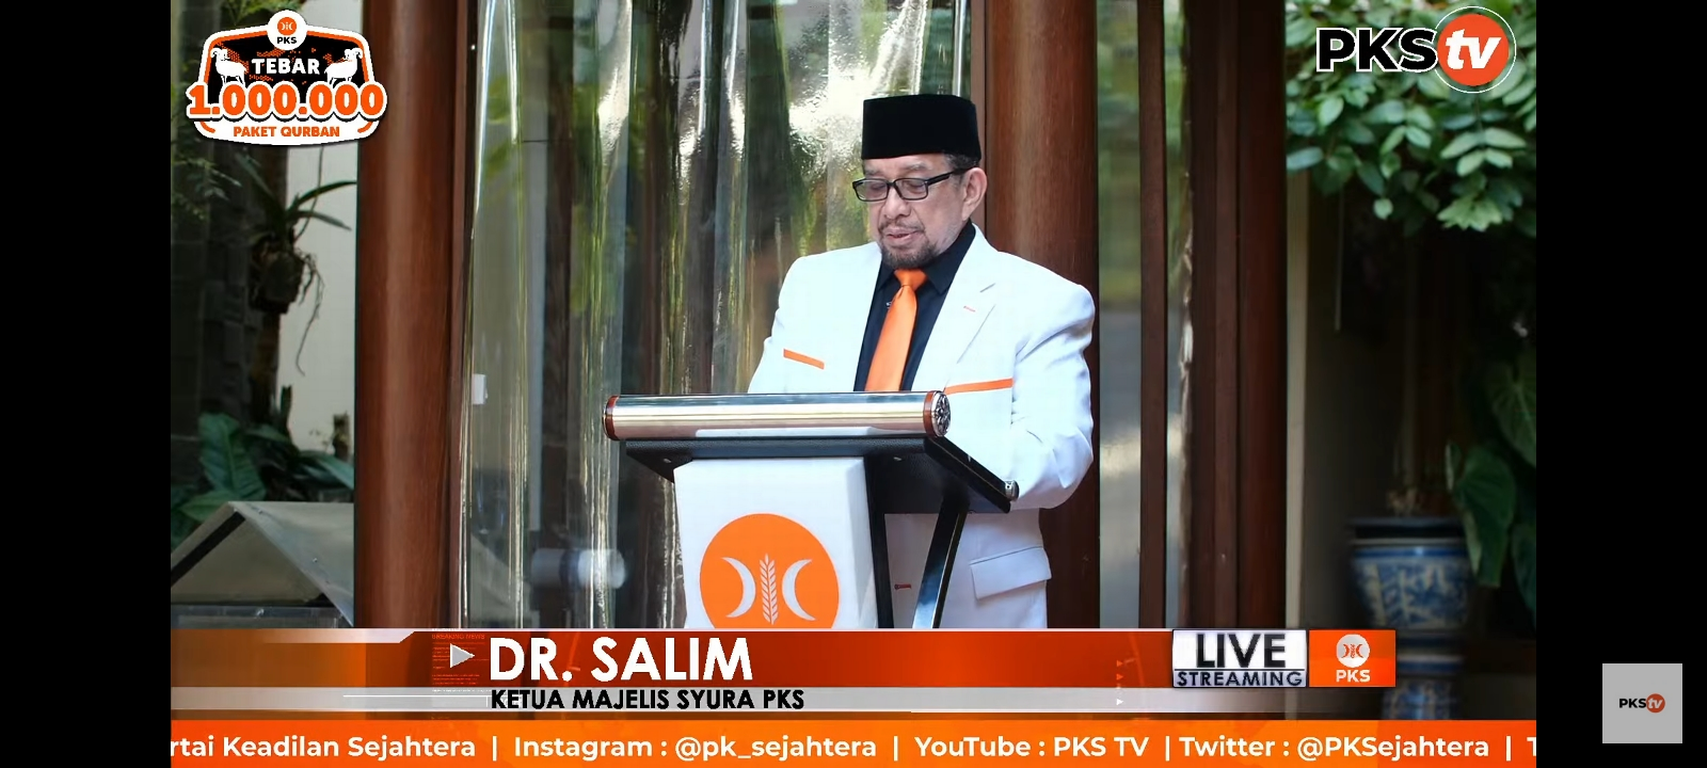 Dr. Salim